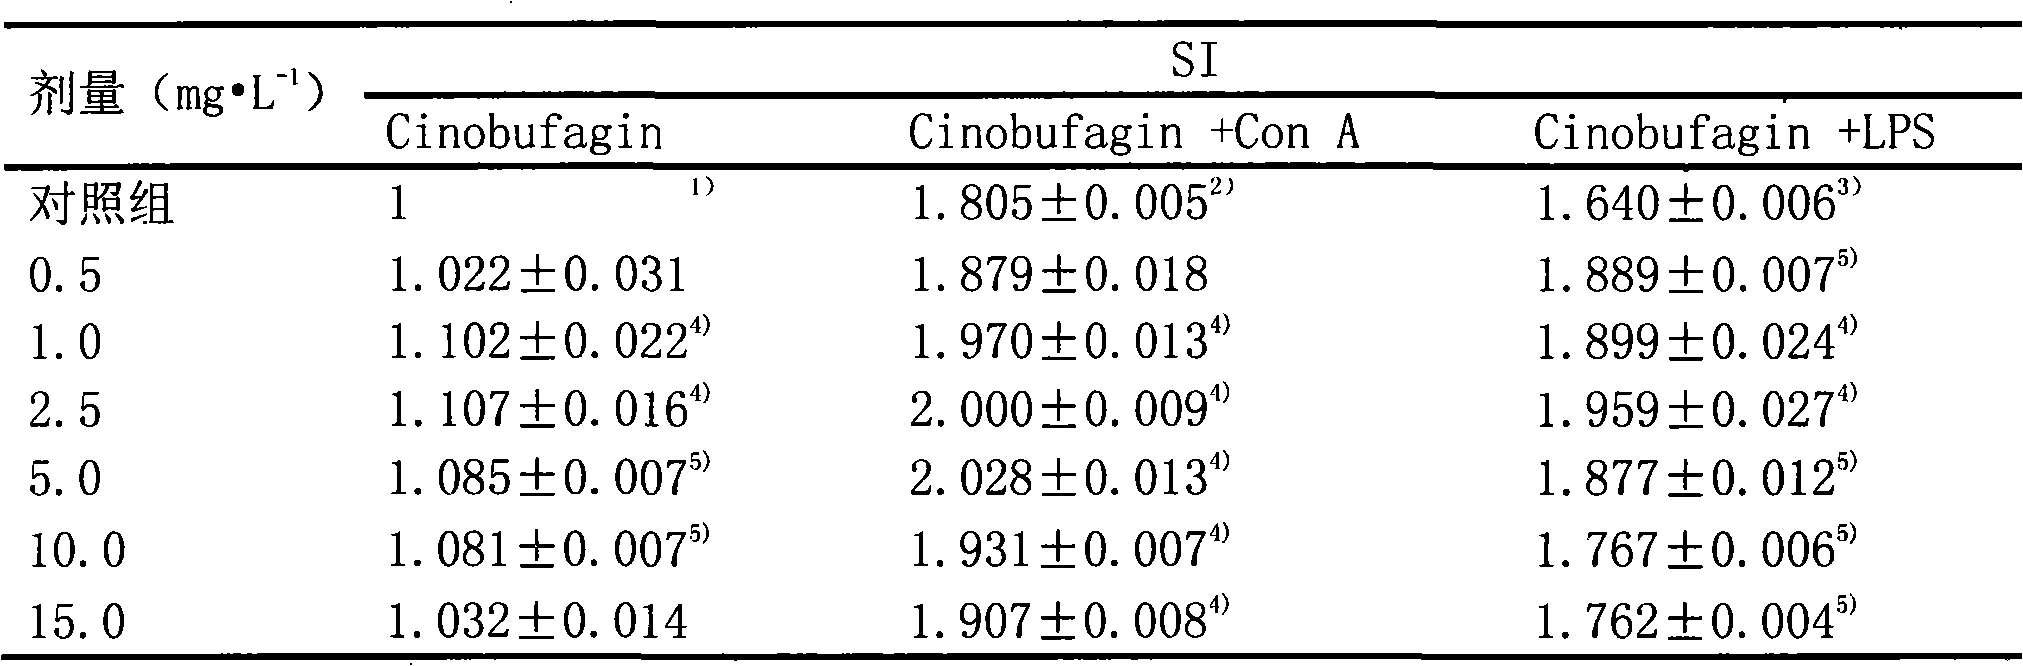 Immunoregulation novel use of cinobufagin